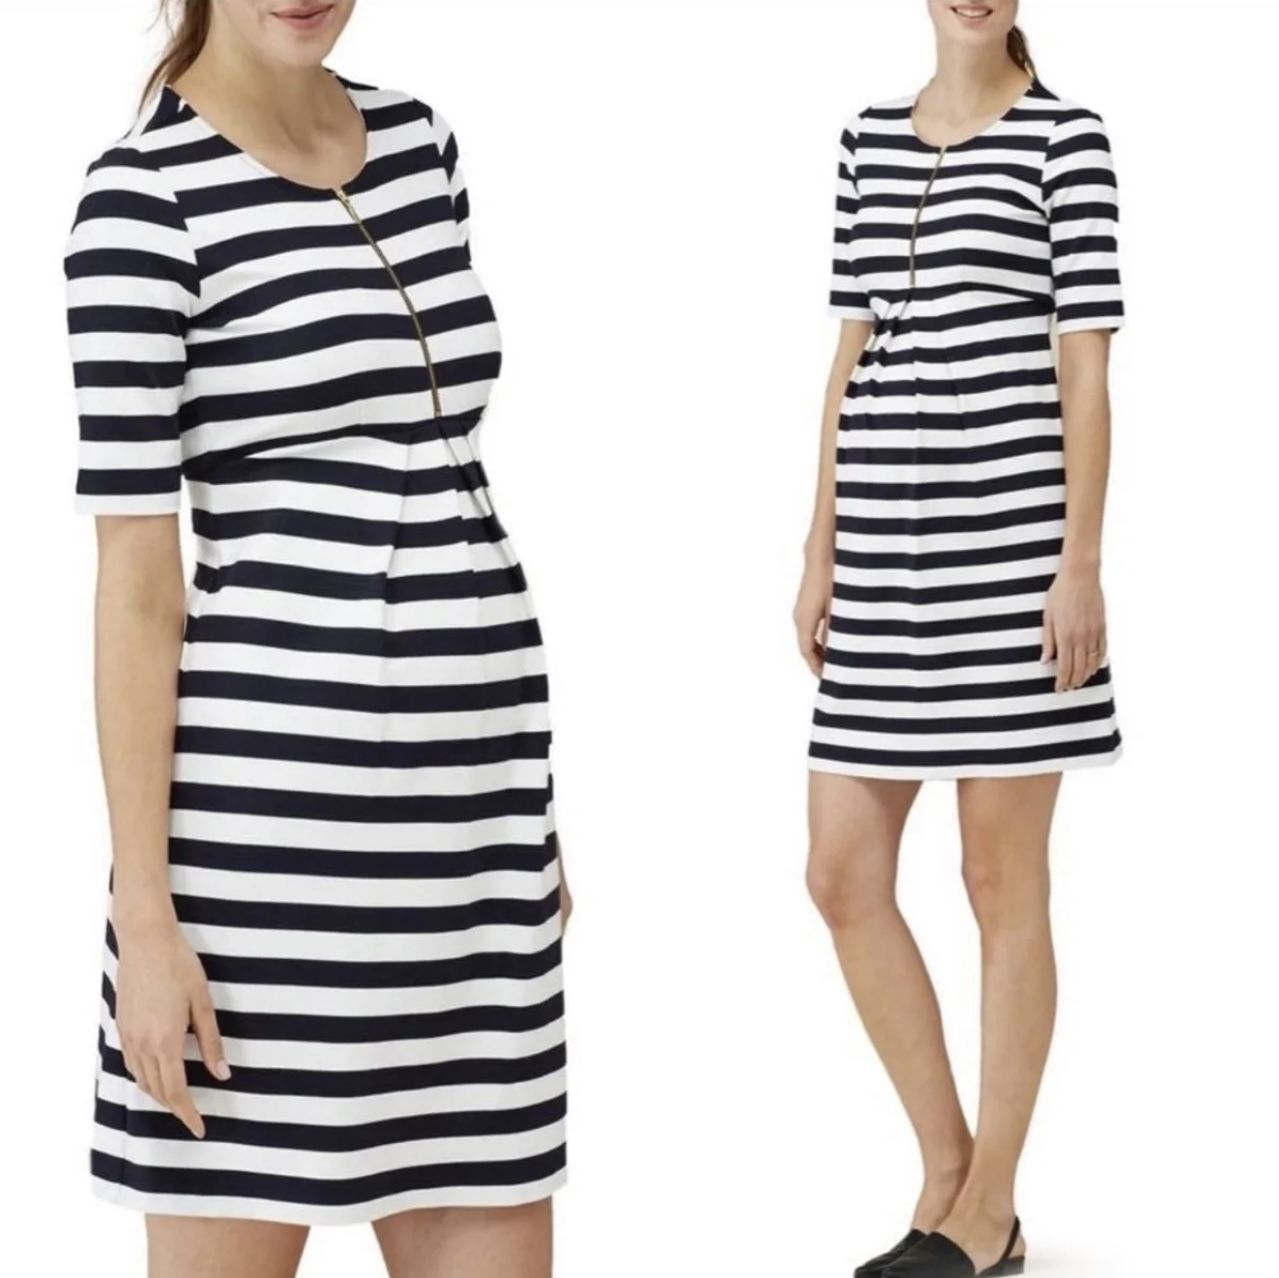 NWT Isabella Oliver Navy/White Maternity Dress Sz 4.